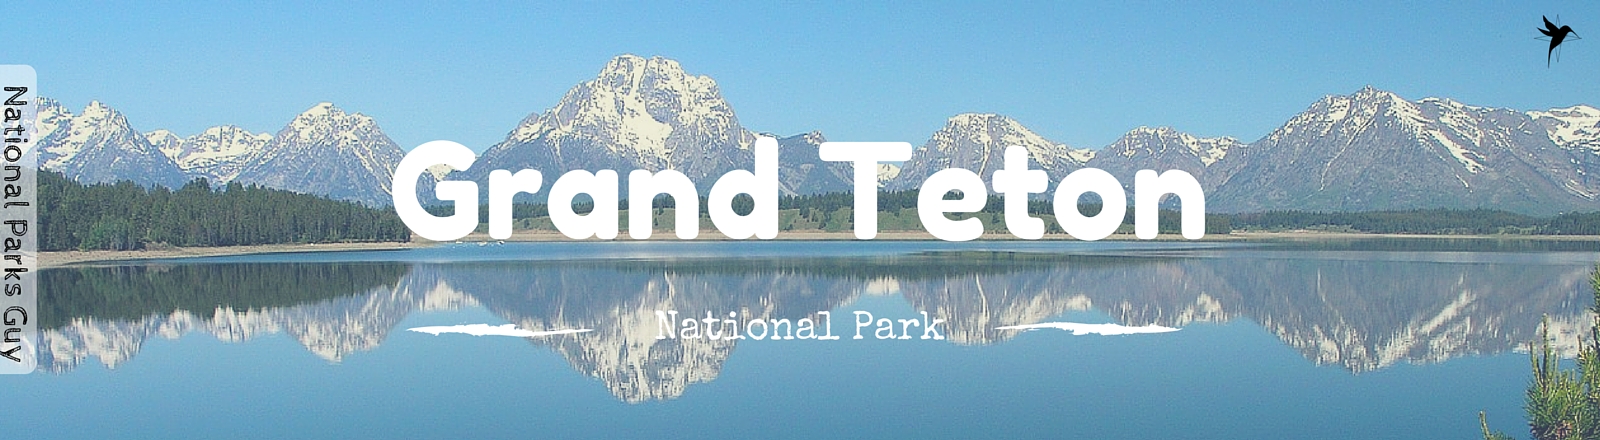 Grand Teton National Park, USA, National Parks Guy, Stories, Tales, Adventures, Wildlife